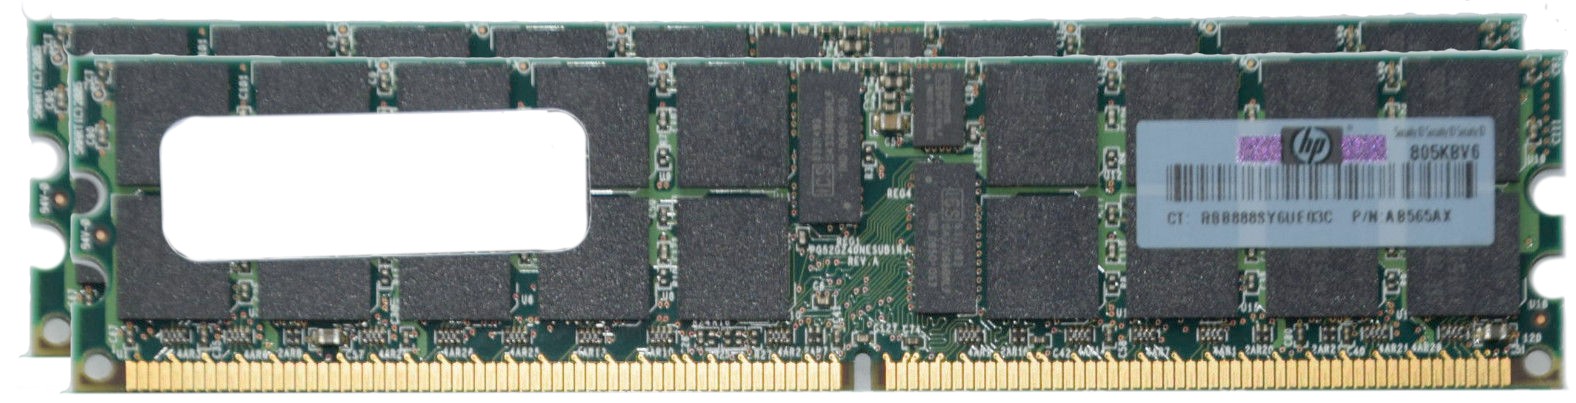 100296-T20-Smart Modular Technologies AB565AX 4GB (2x2GB) PC2-4200 DDR2-667MHz ECC Server RAM-image